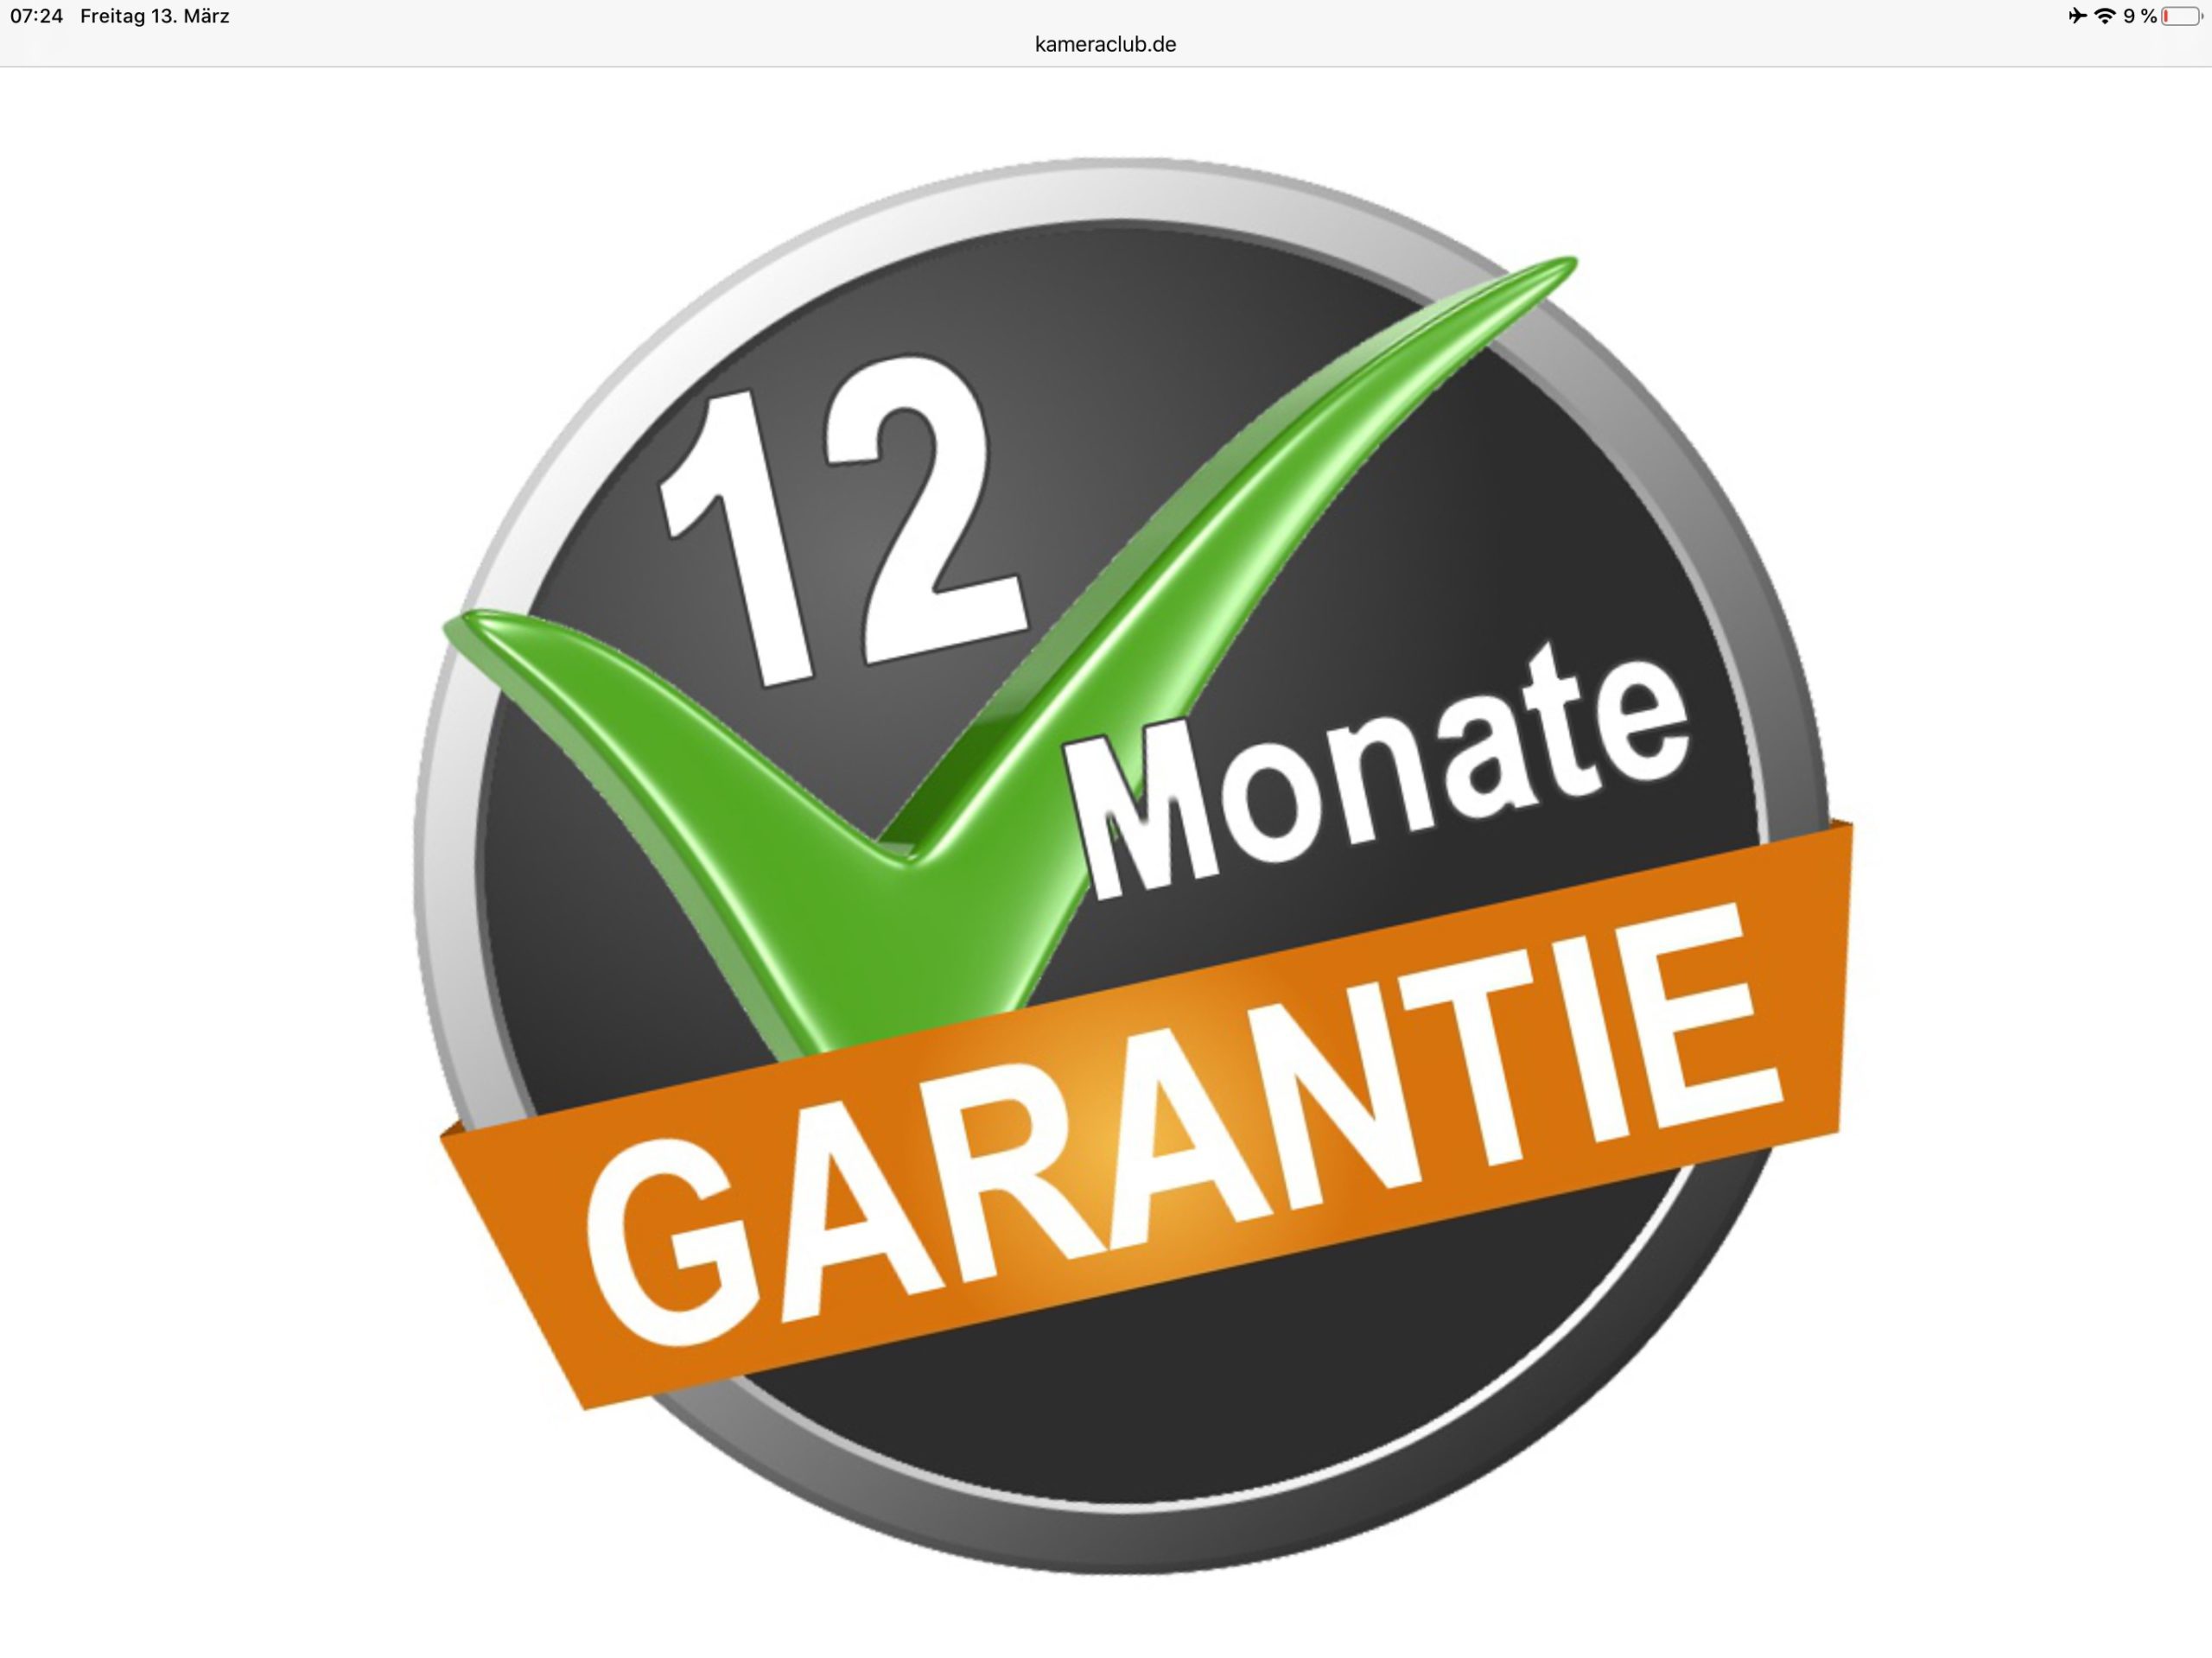 12 monate Garantie